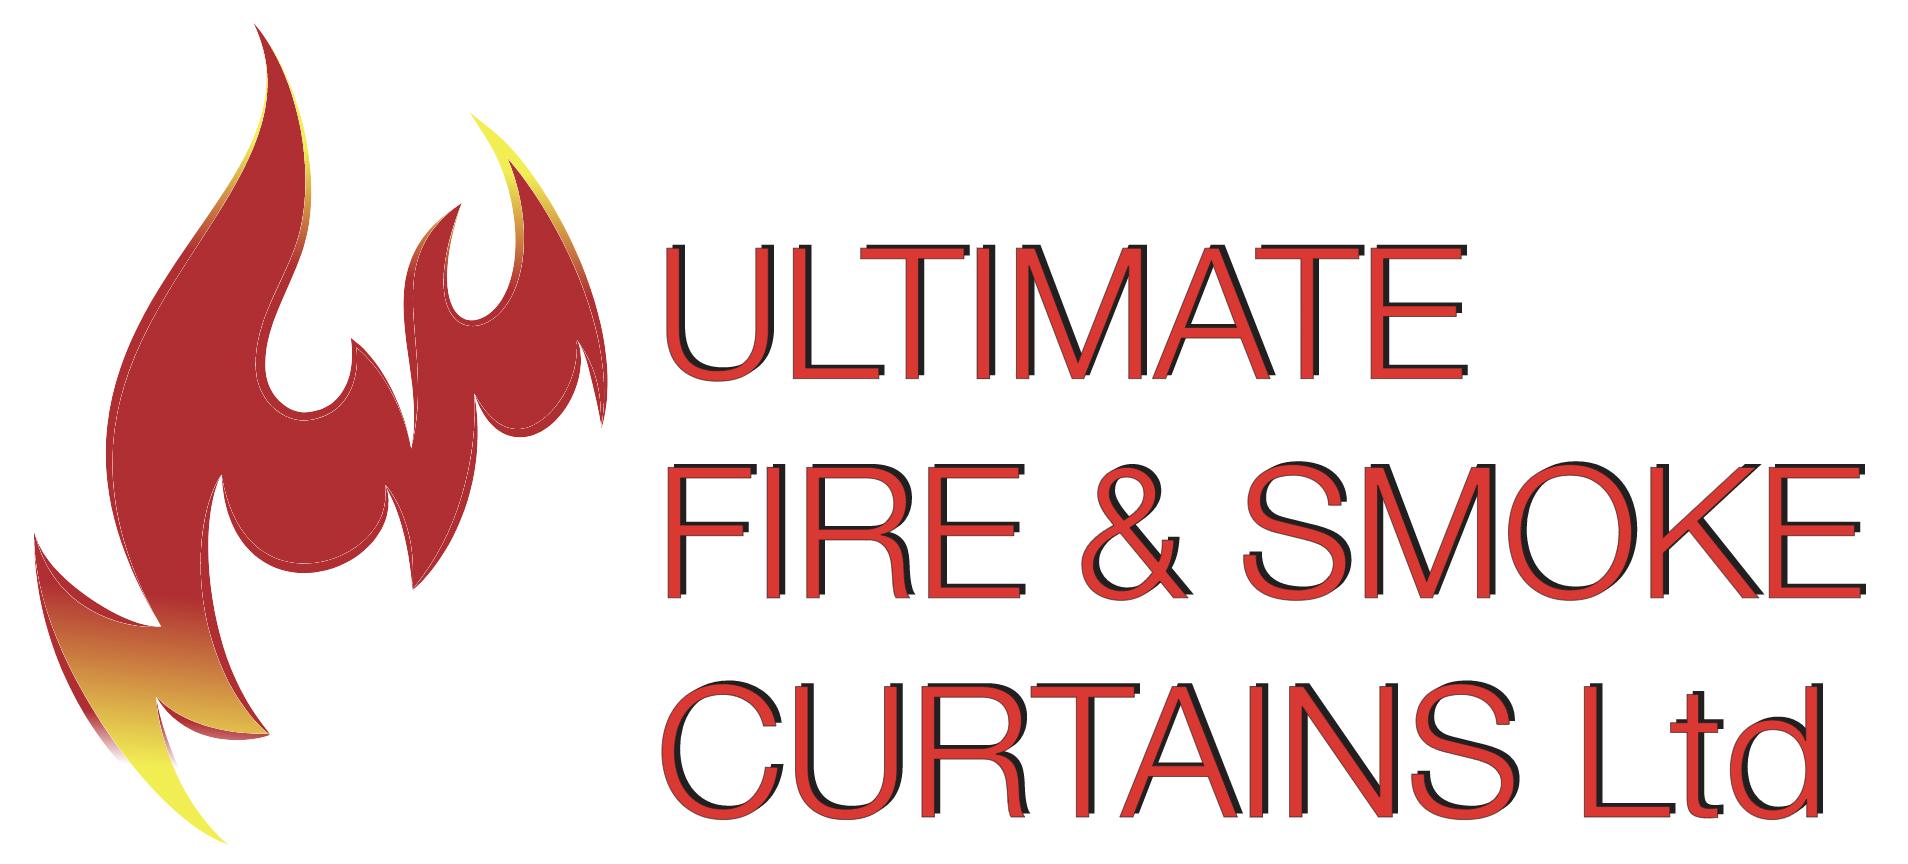  Ultimate Fire & Smoke Curtains Ltd